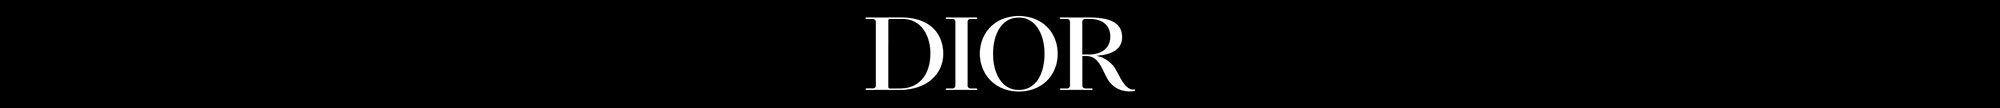 Brand Banner - Dior - (PDP)